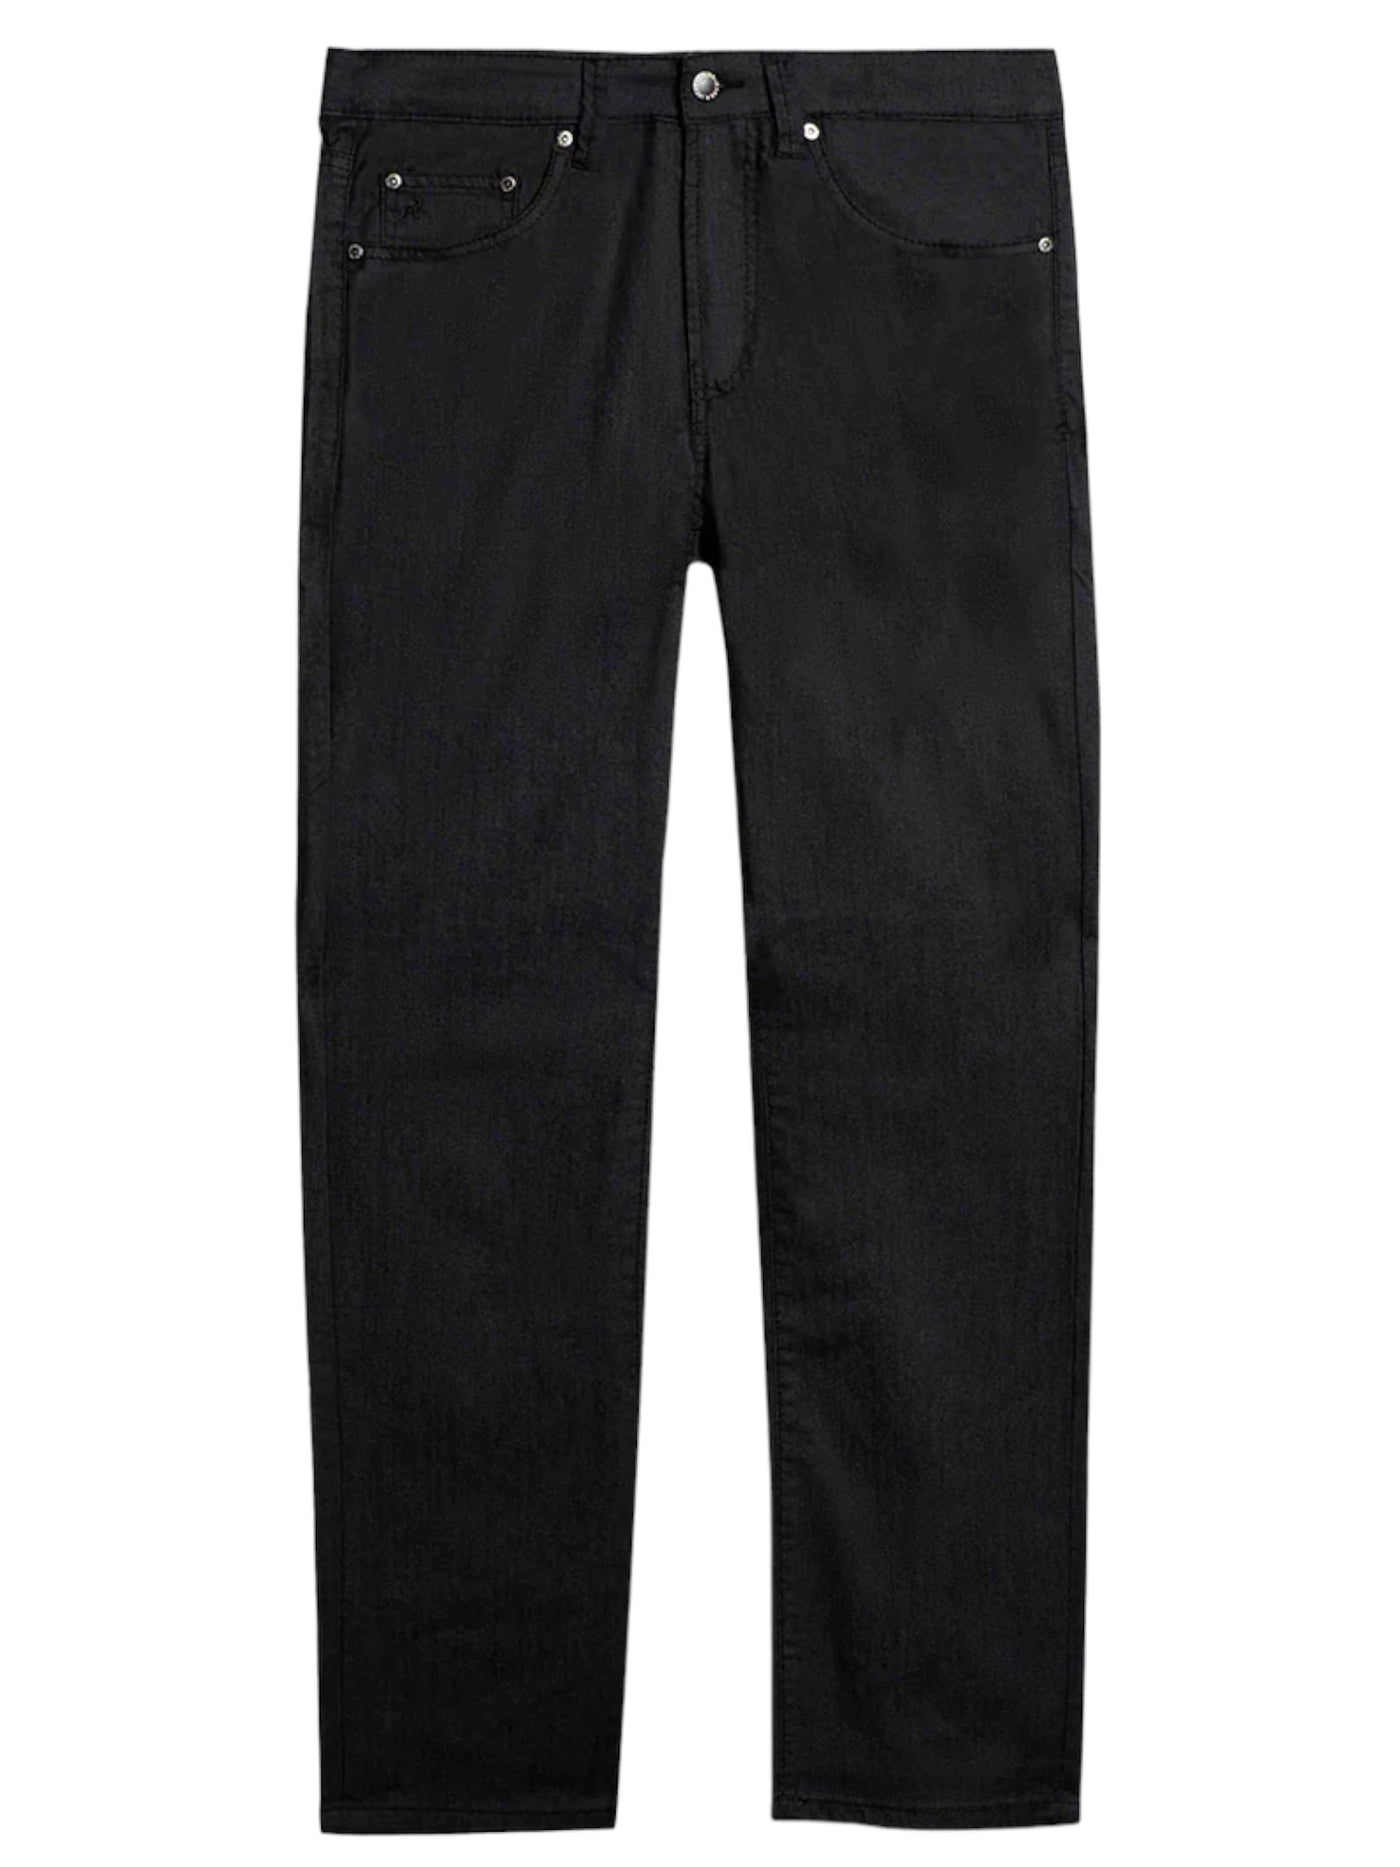 Pantalon de twill extensible noir coupe semi-ajustée